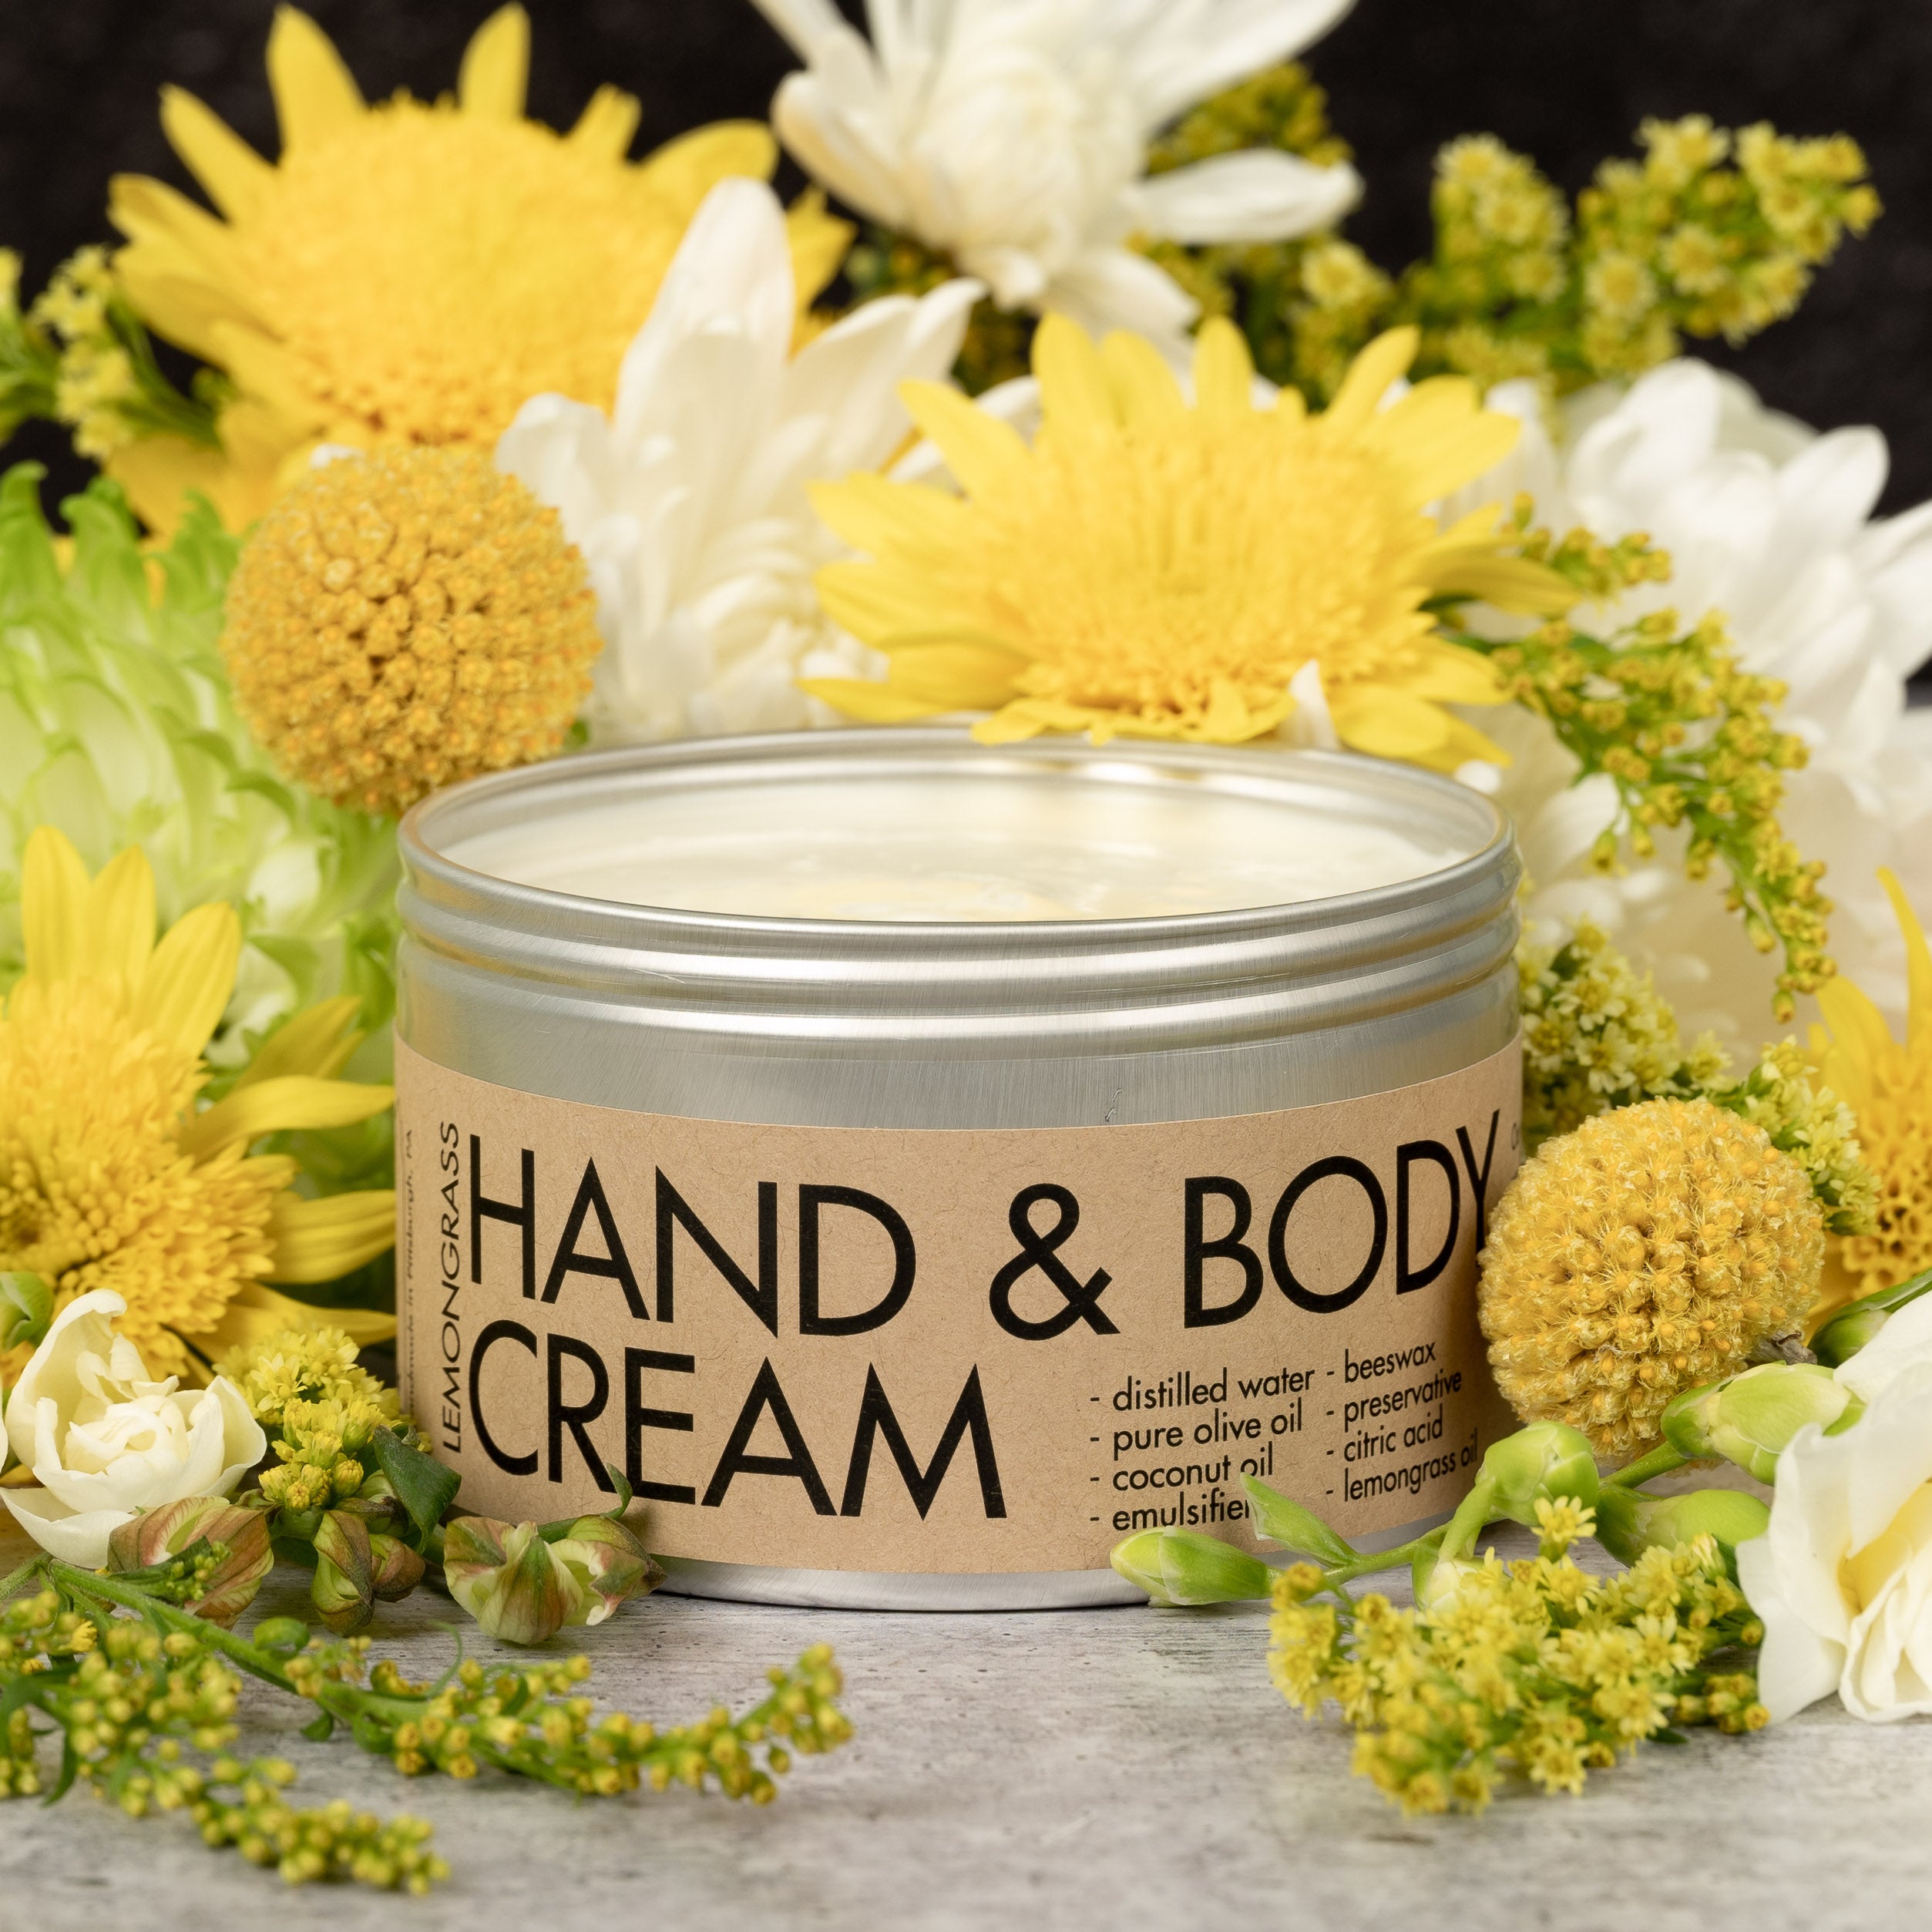 A container of Lemongrass Hand & Body cream next to flowers.